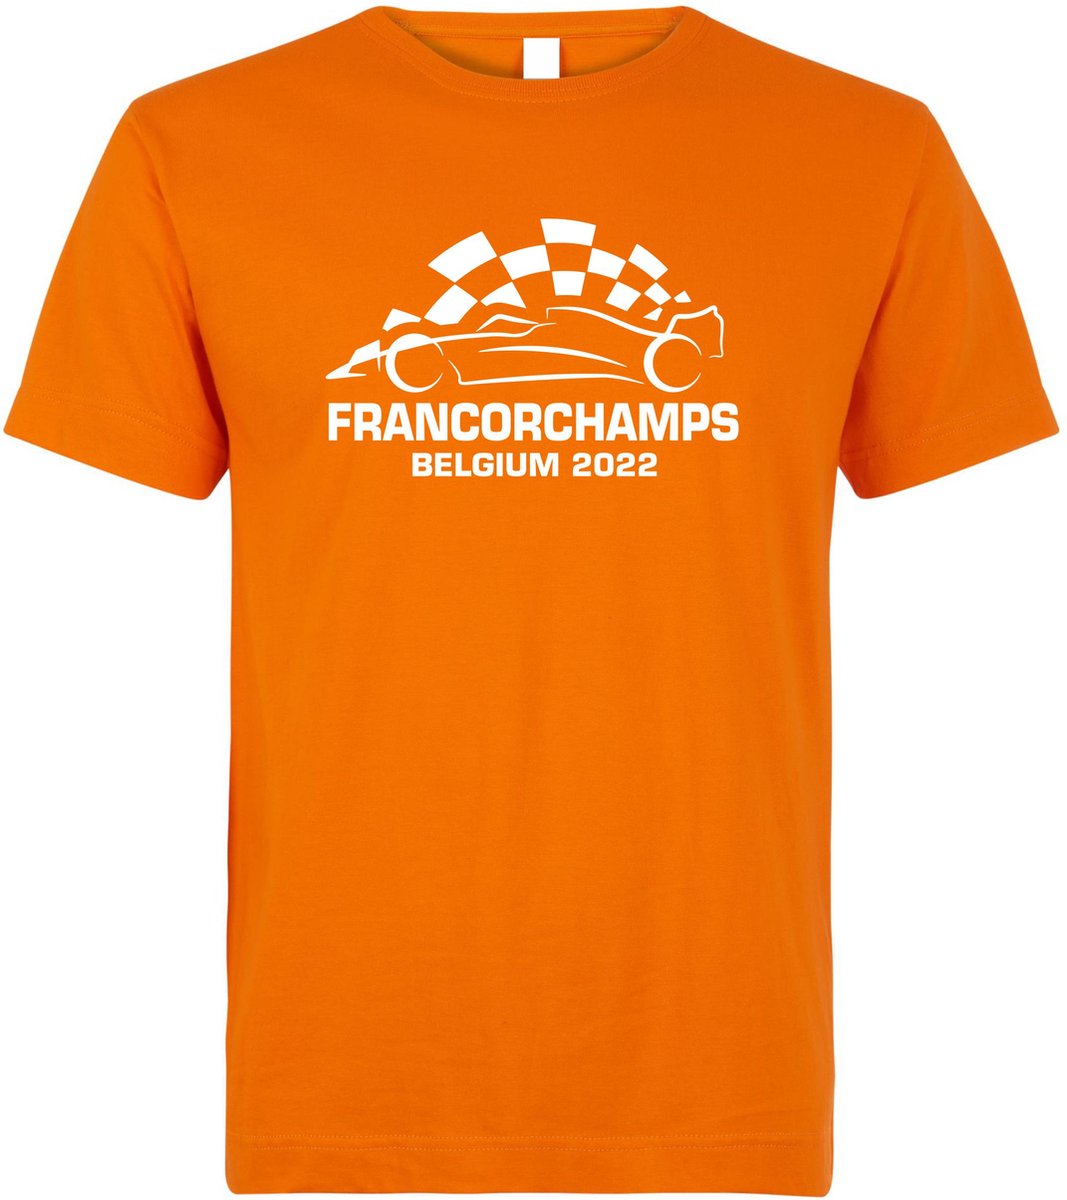 T-shirt Francorchamps Belgium 2022 met raceauto | Max Verstappen / Red Bull Racing / Formule 1 fan | Grand Prix Circuit Spa-Francorchamps | kleding shirt | Oranje | maat XL